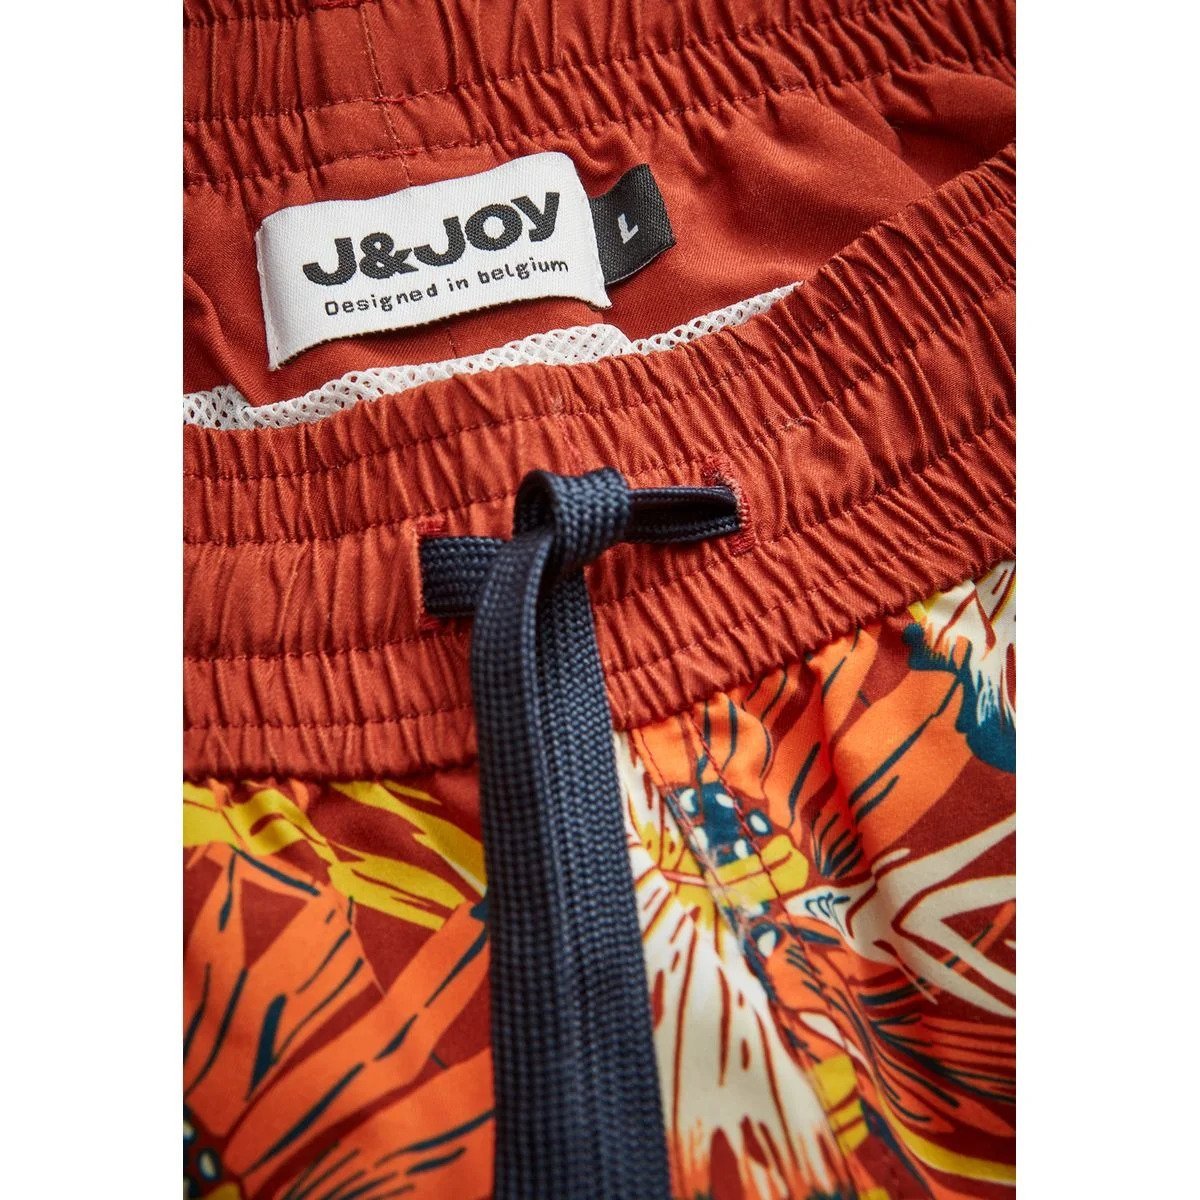 Orange patterned swim trunks by J&Joy